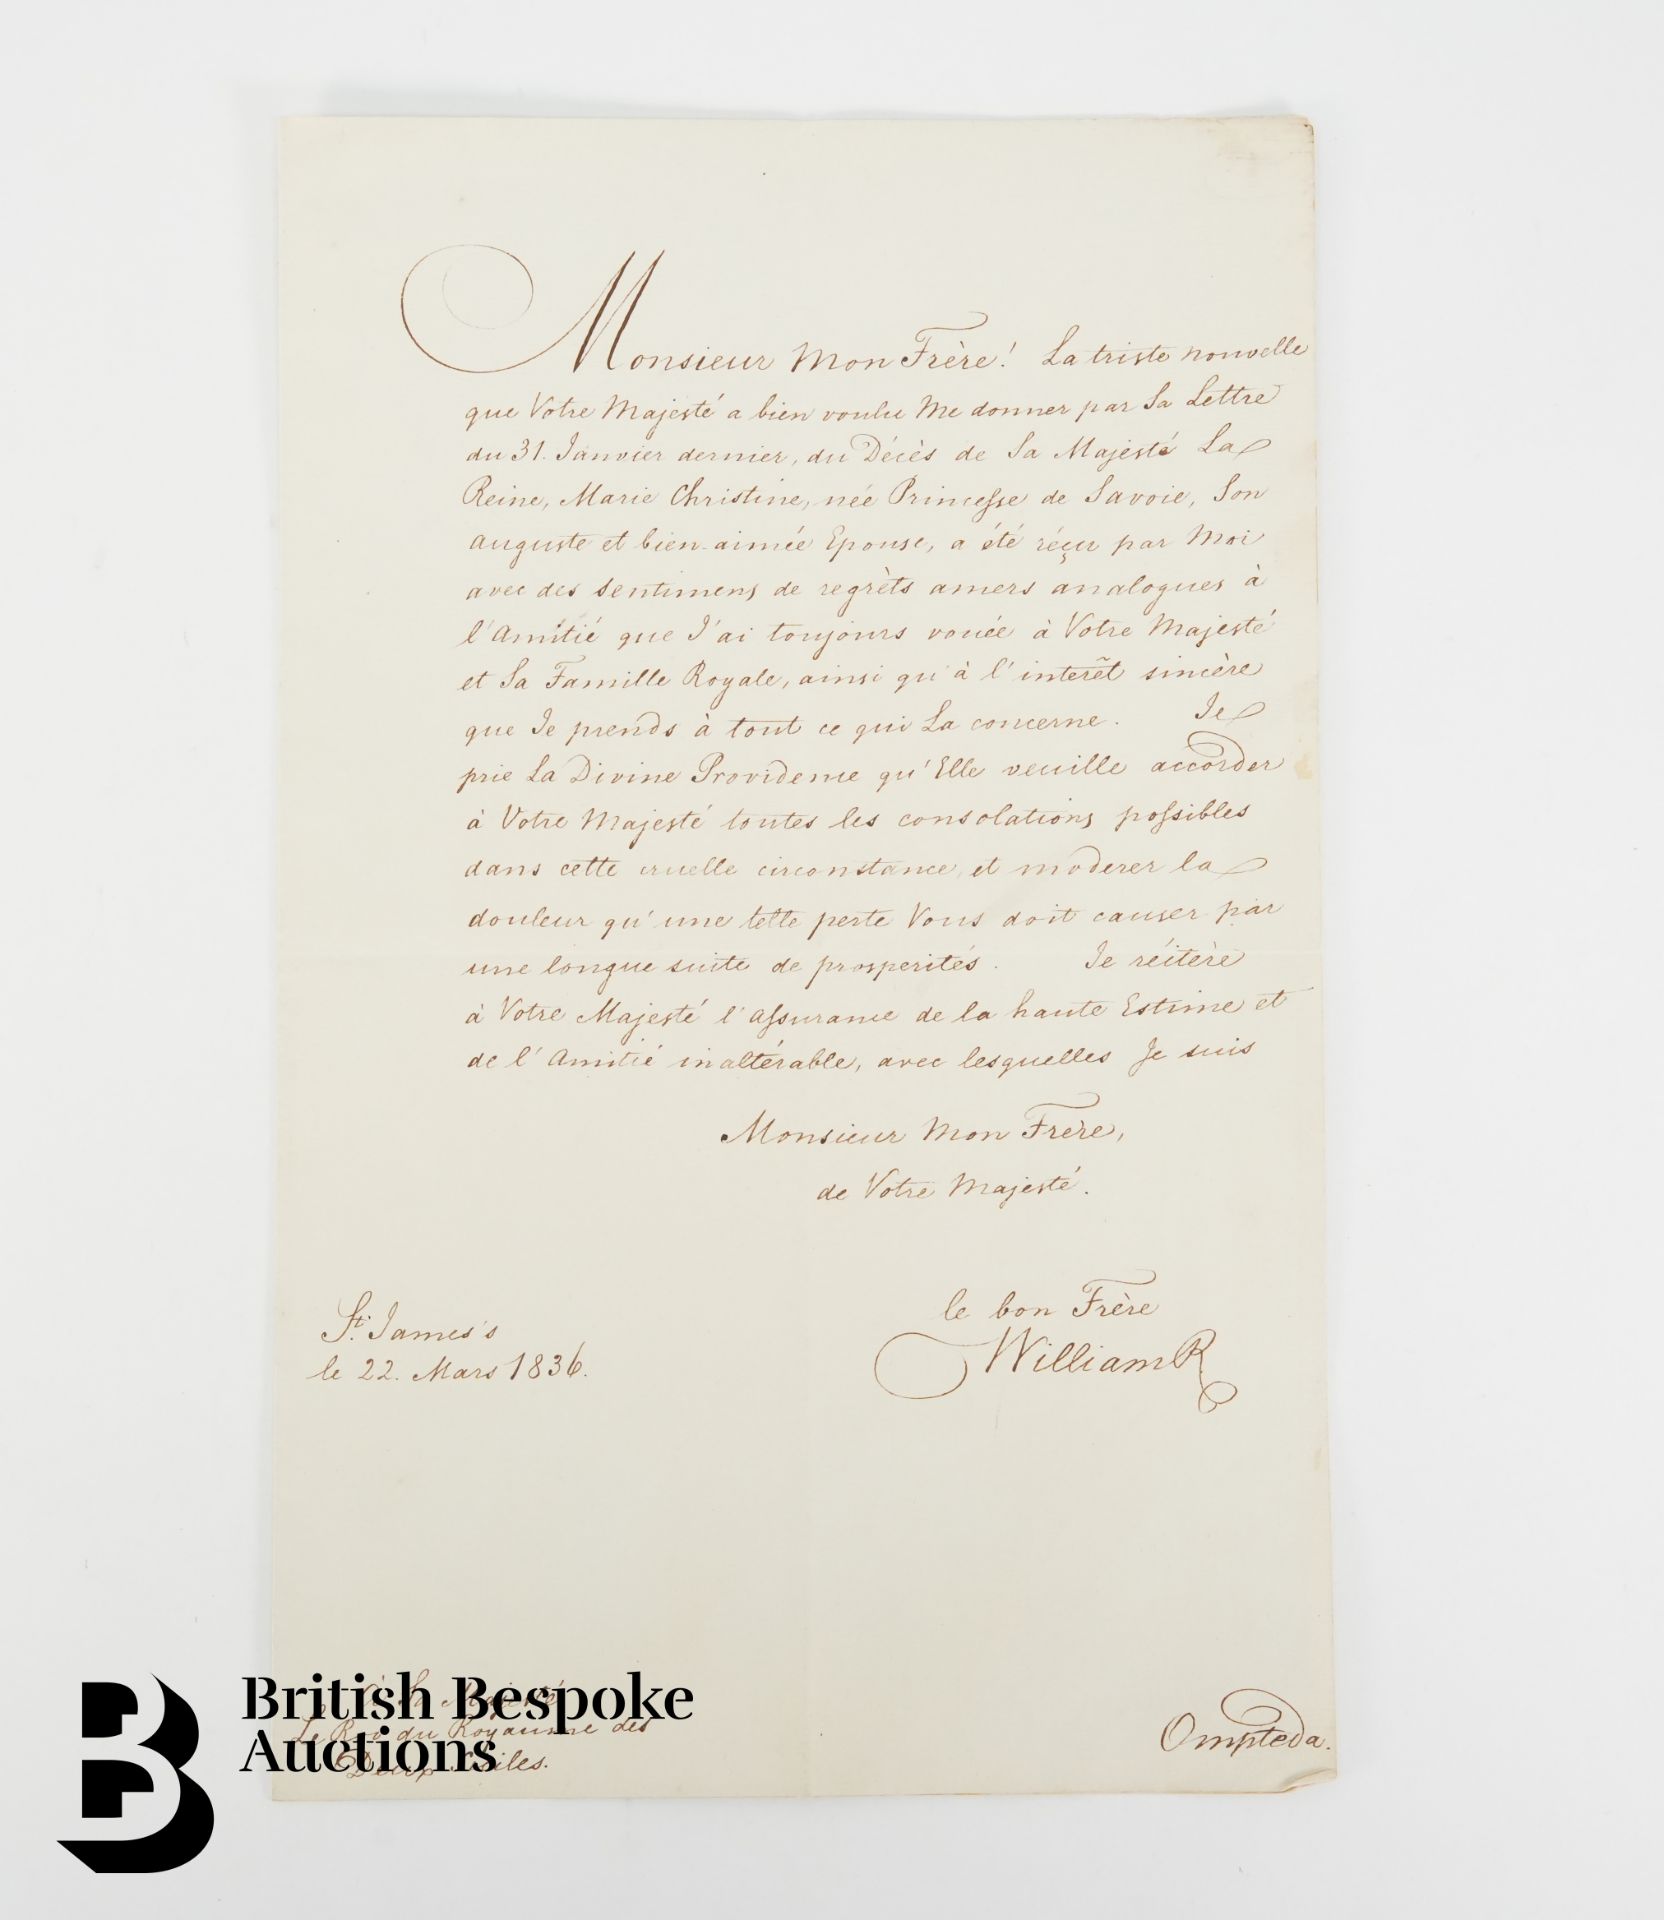 1836 King William IV Document - Signed